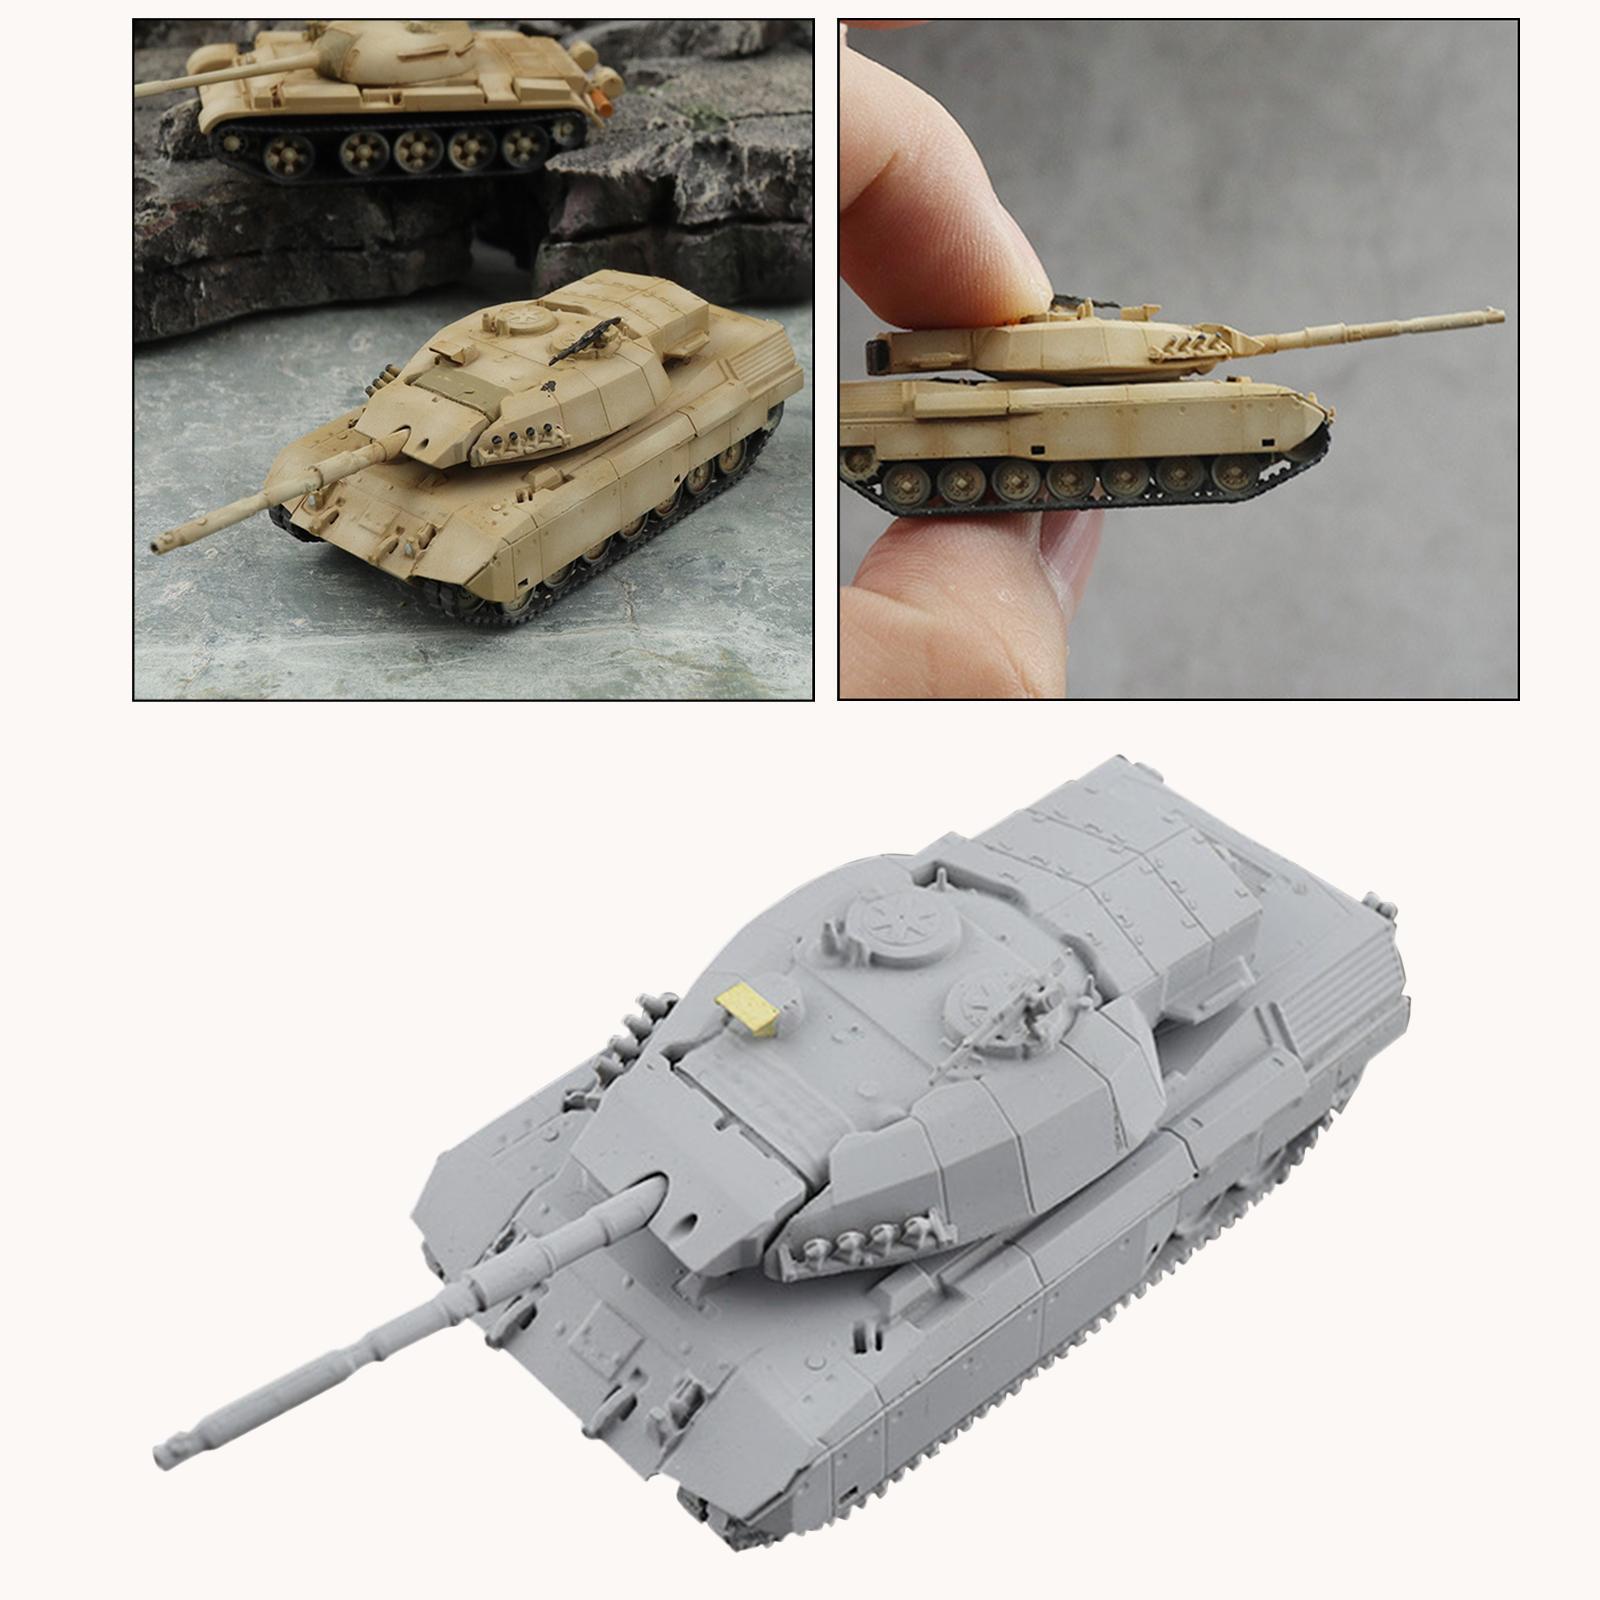 1:144 Mini Tank Model Toys Kids Miniature War Scene Games Army Vehicle